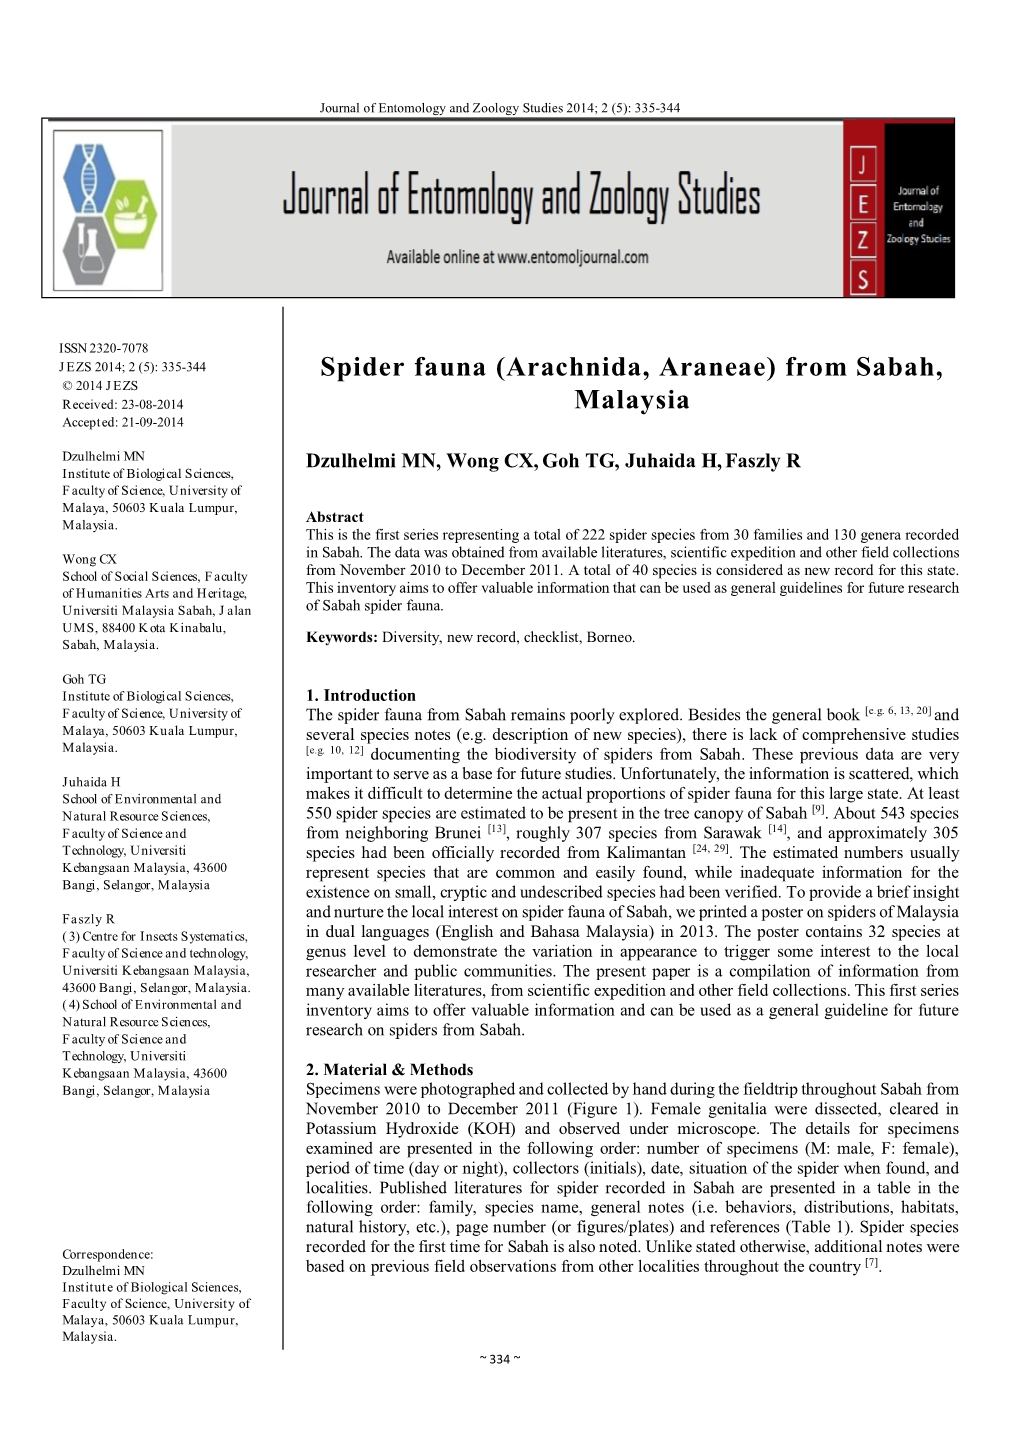 Spider Fauna (Arachnida, Araneae) from Sabah, Malaysia